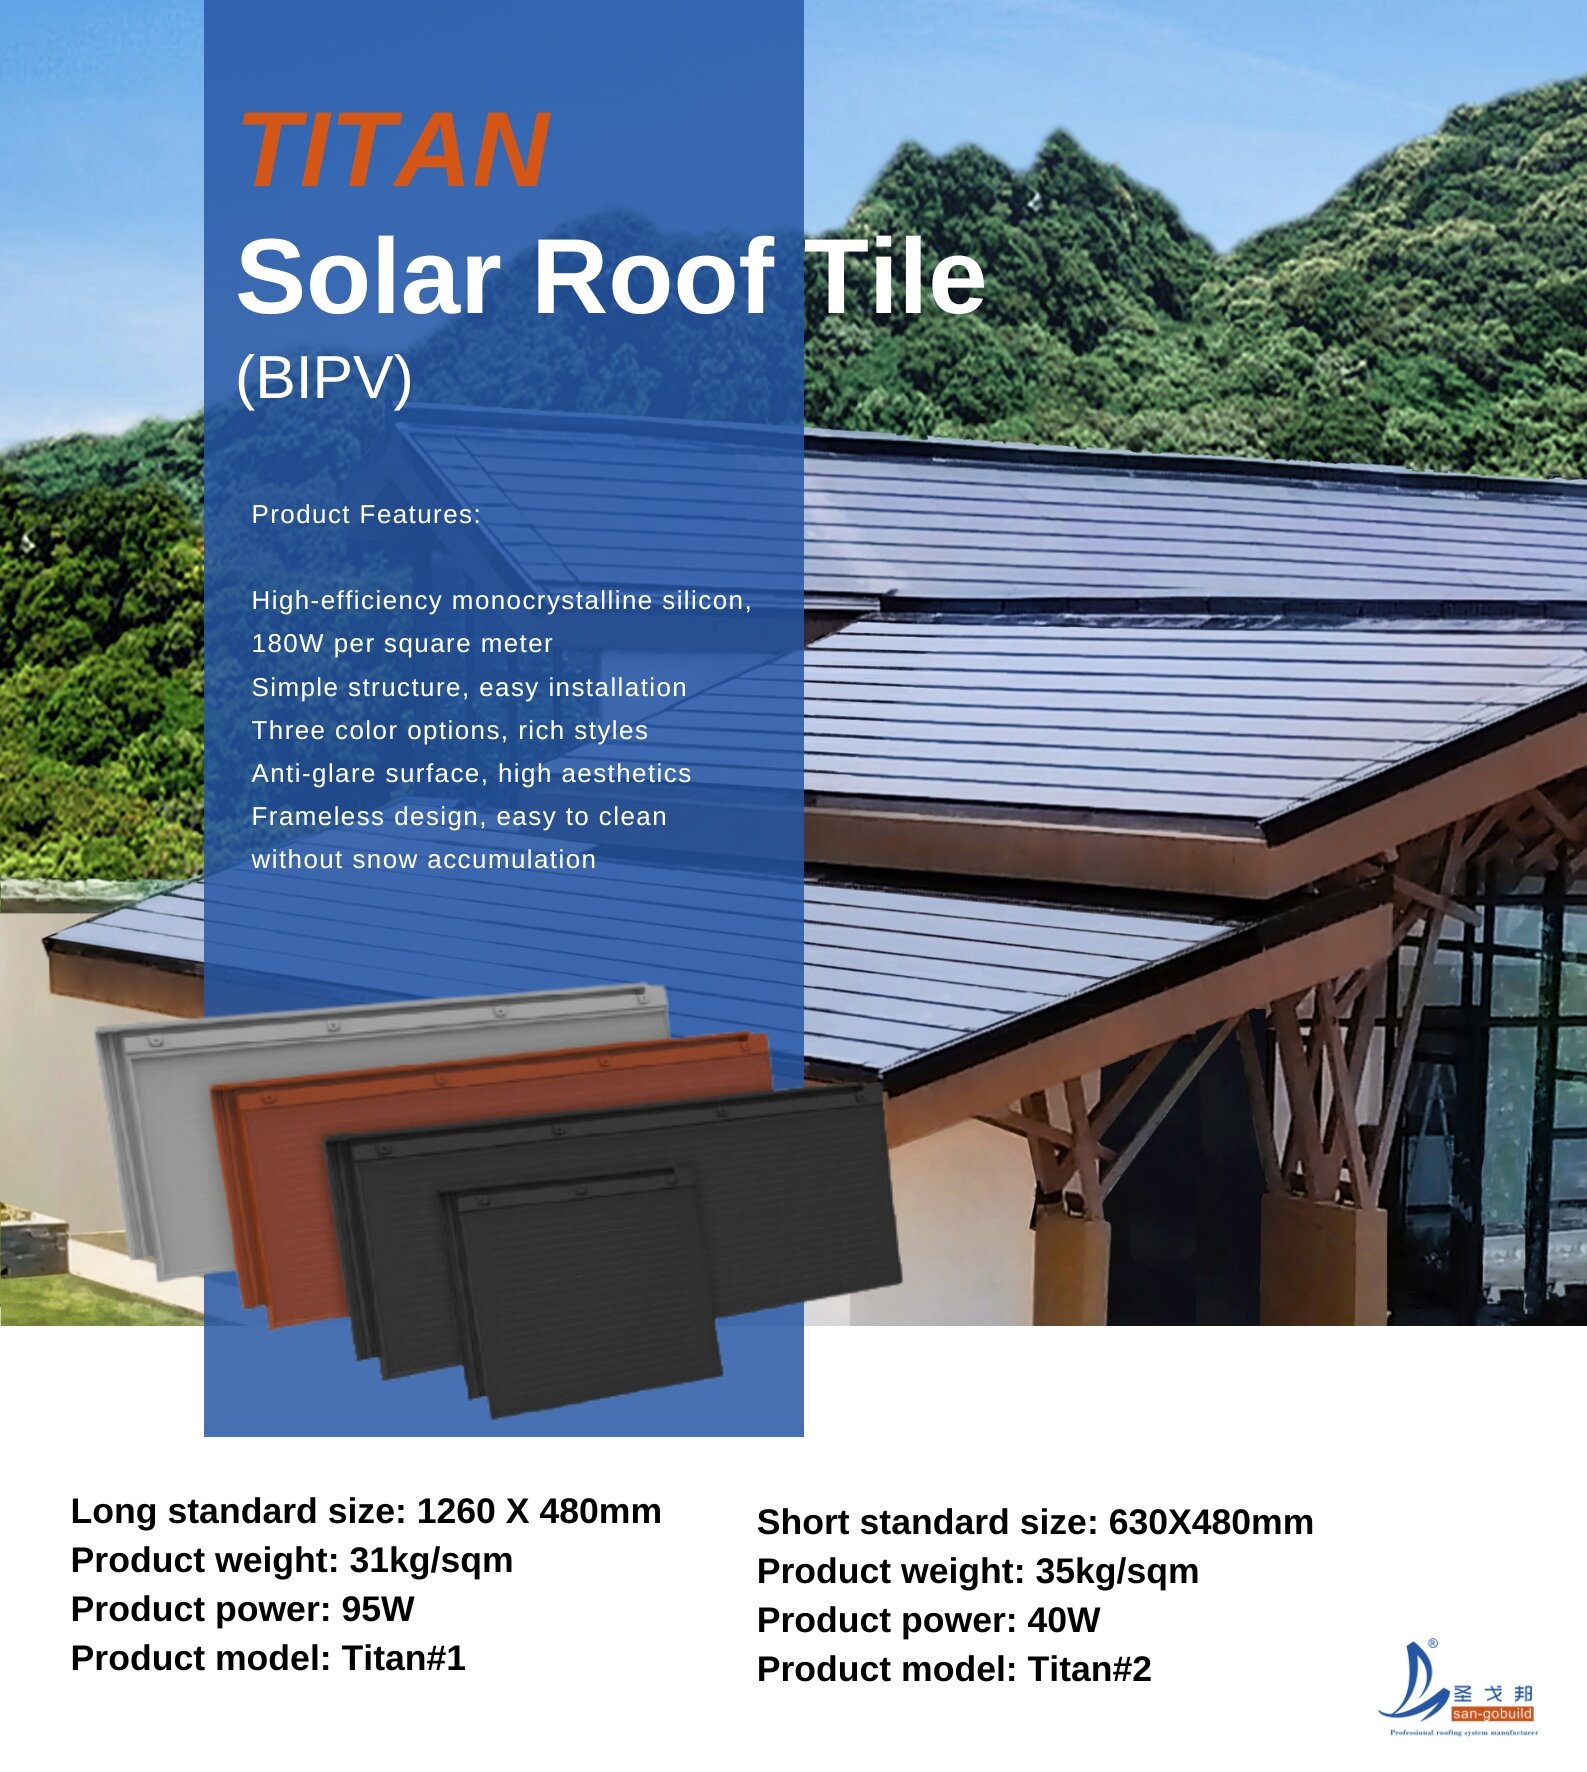 Sangobuild® Launches Multiple New Generation Titan solar roof tiles Products